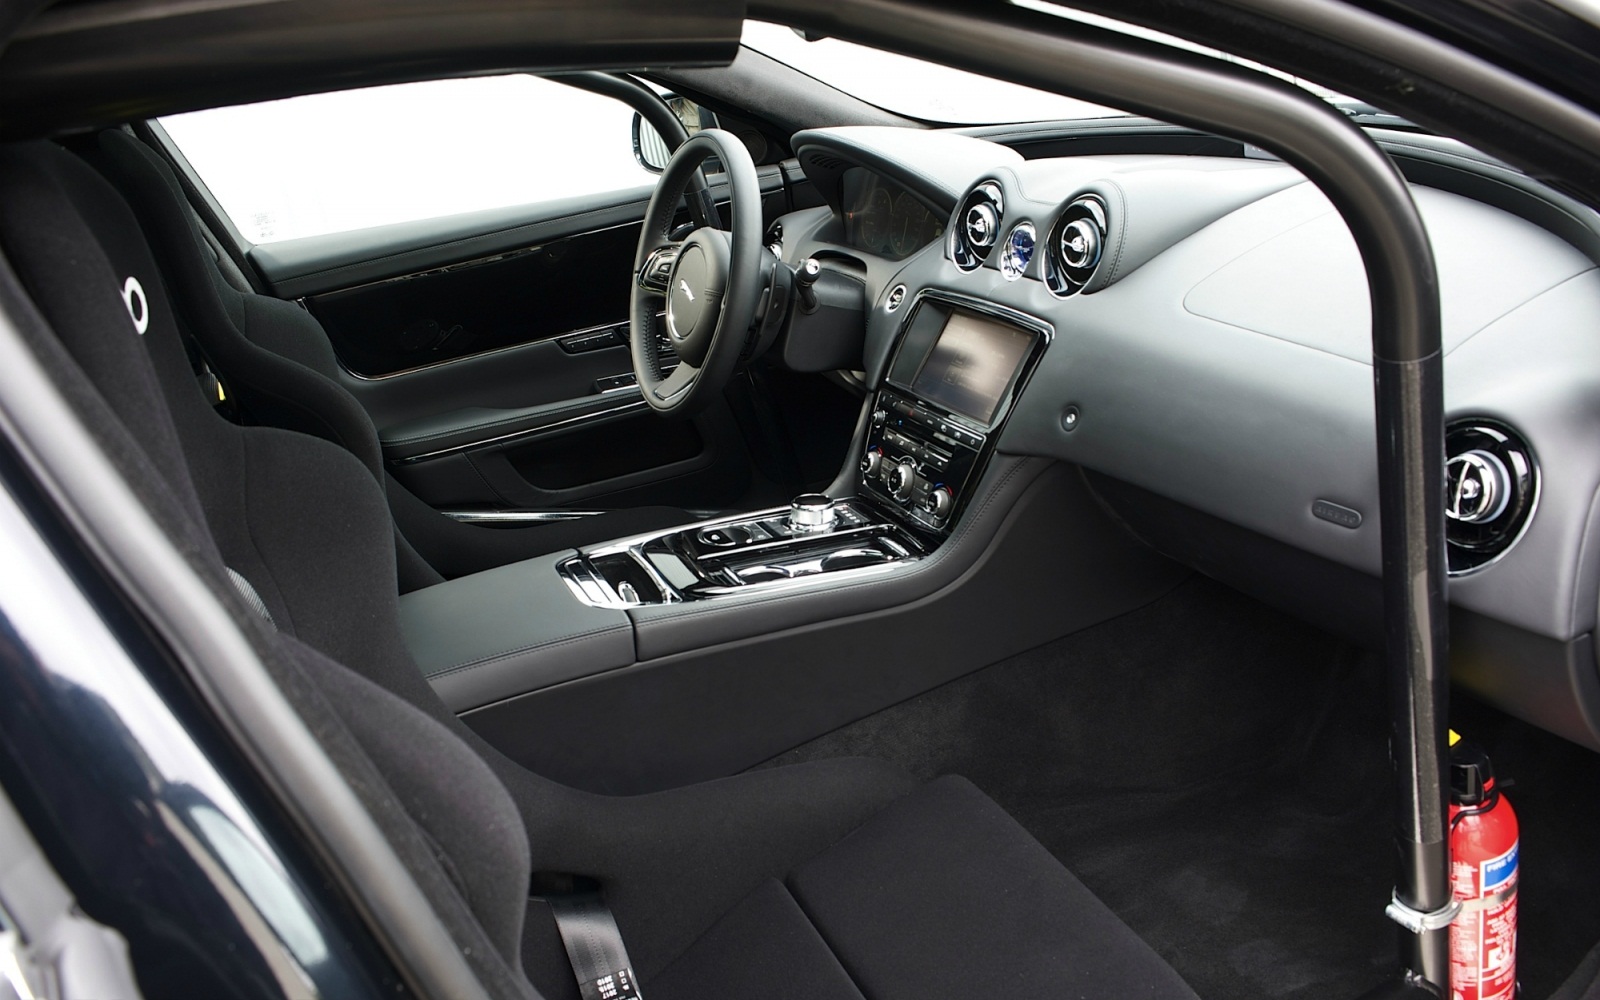 in non-standard matt gray exterior paint with Sport Pack, the Jaguar